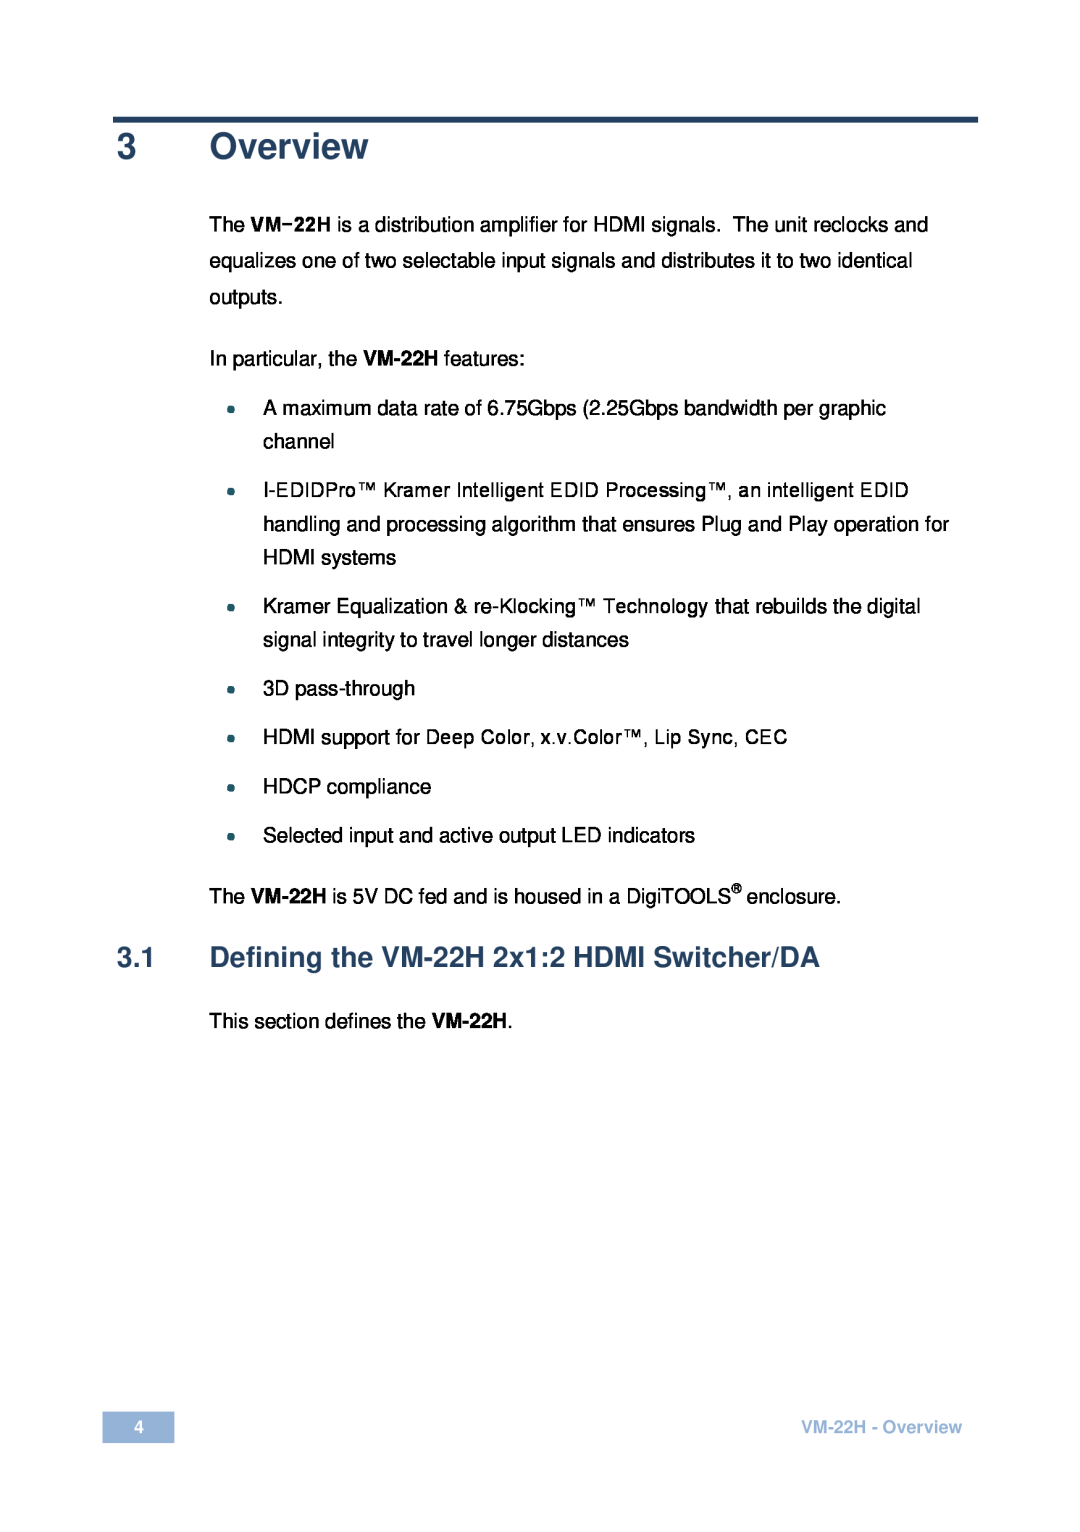 Kramer Electronics user manual Overview, Defining the VM-22H 2x12 HDMI Switcher/DA 